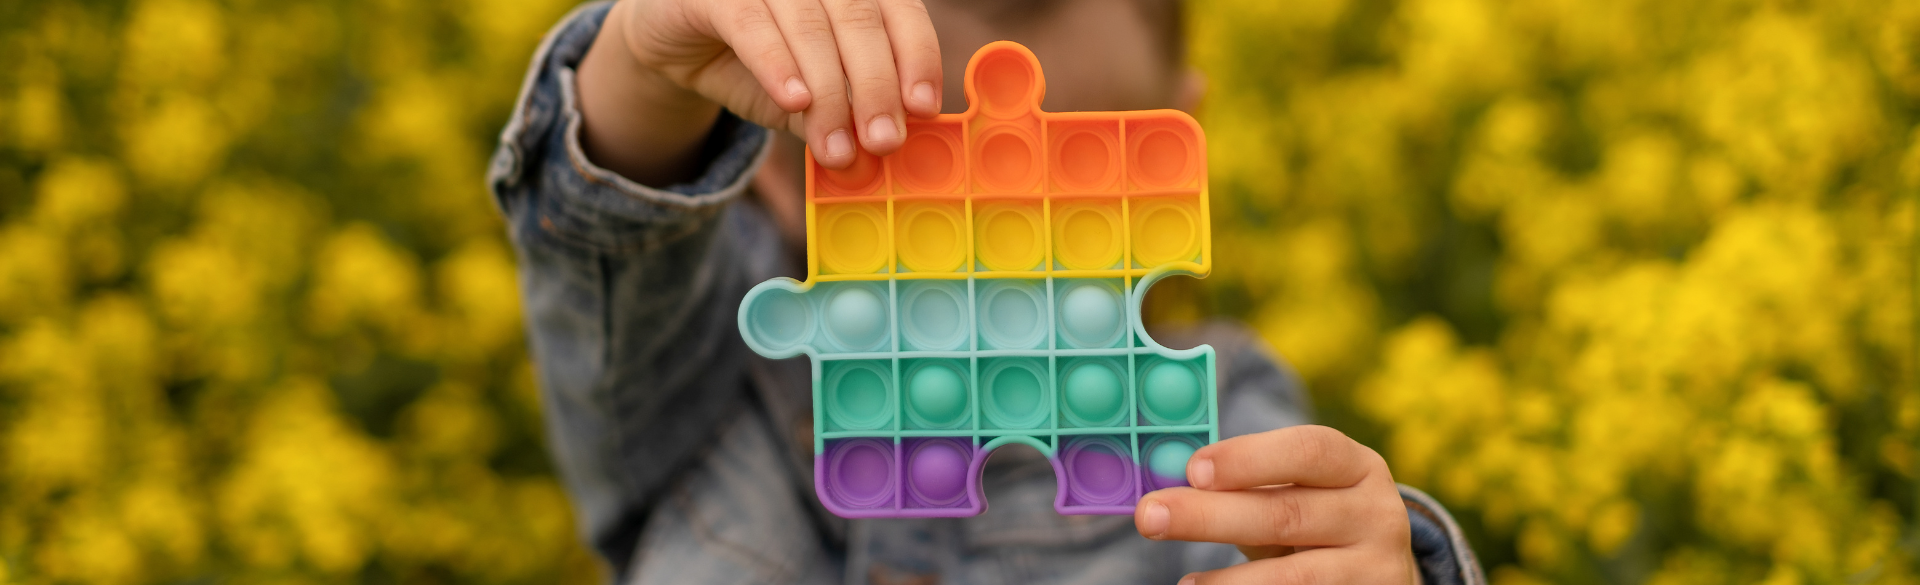 Child holding multicolored puzzle